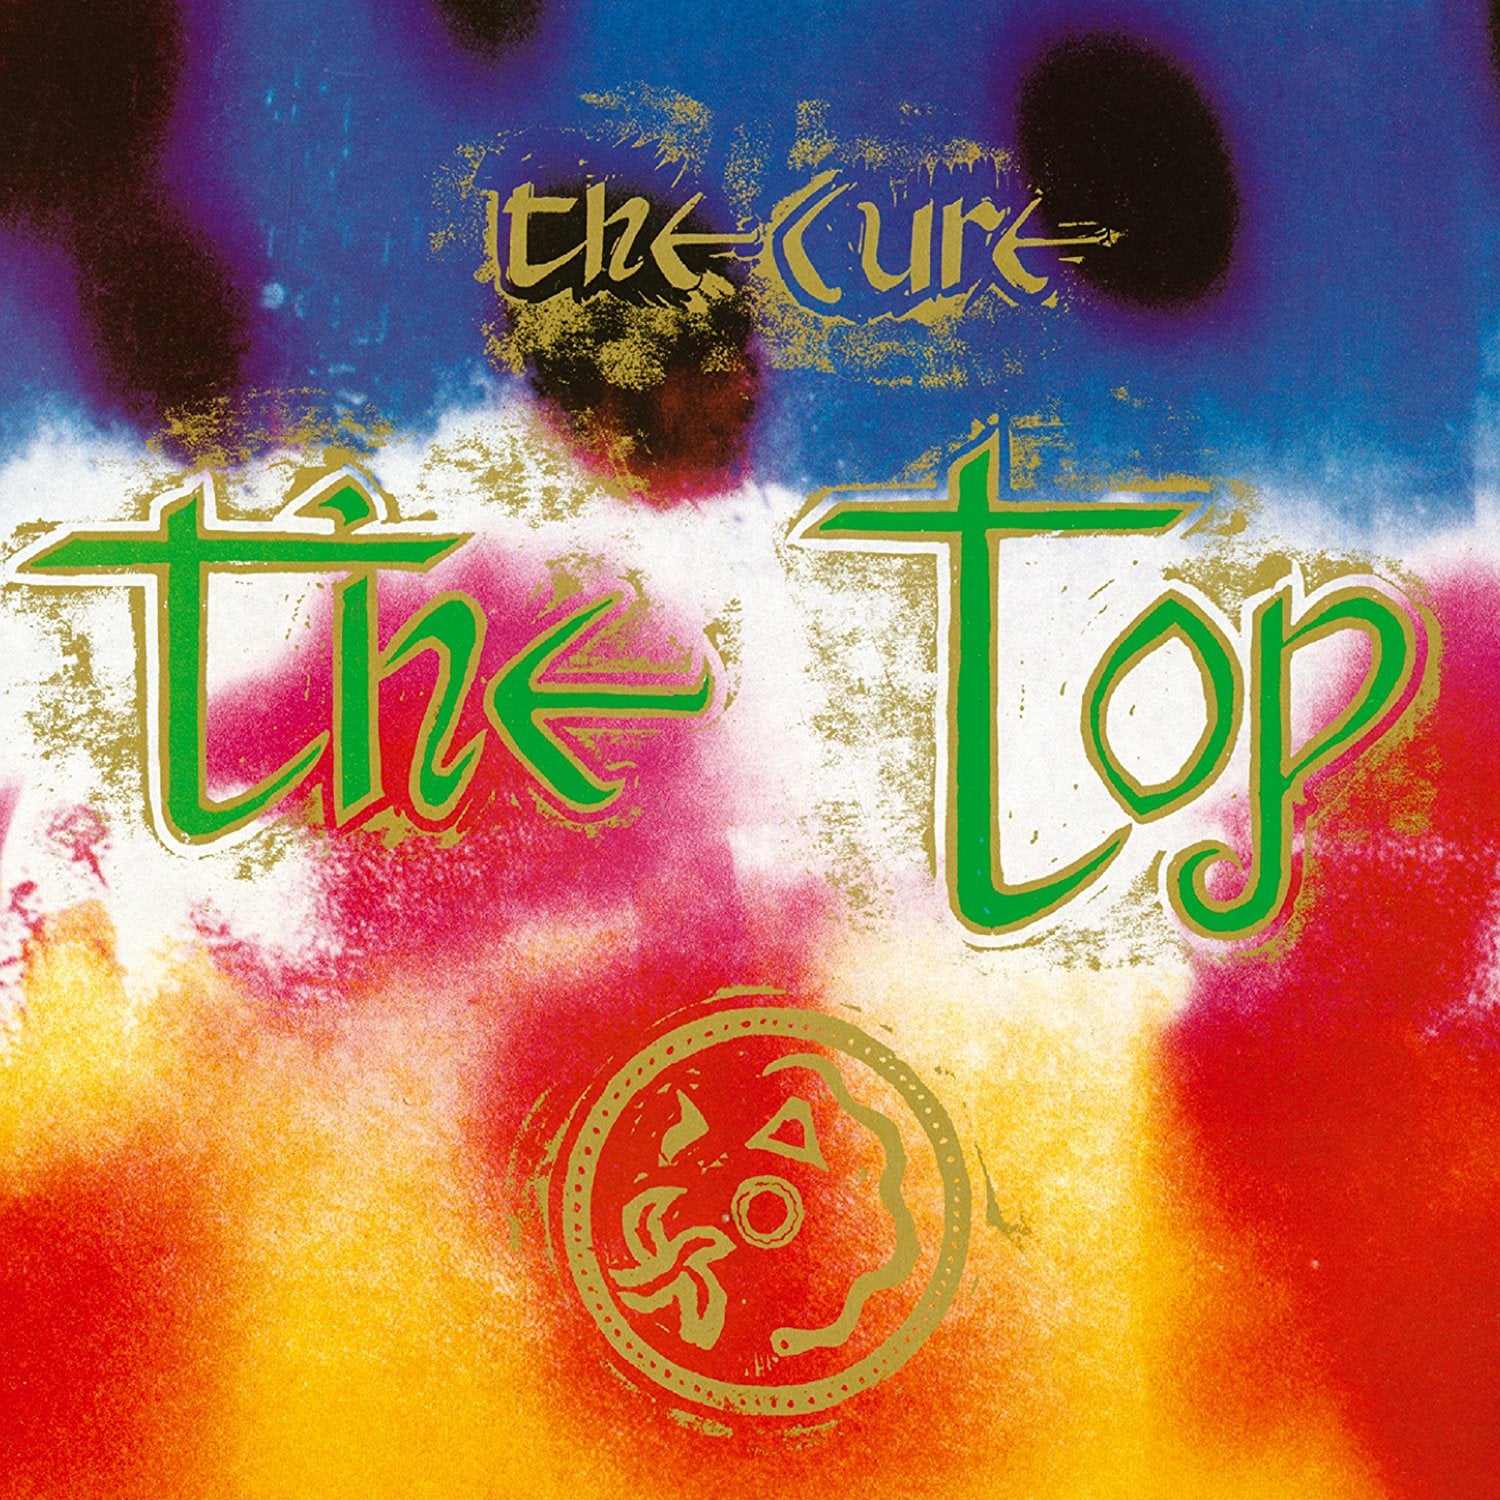 THE CURE - THE TOP Vinyl LP